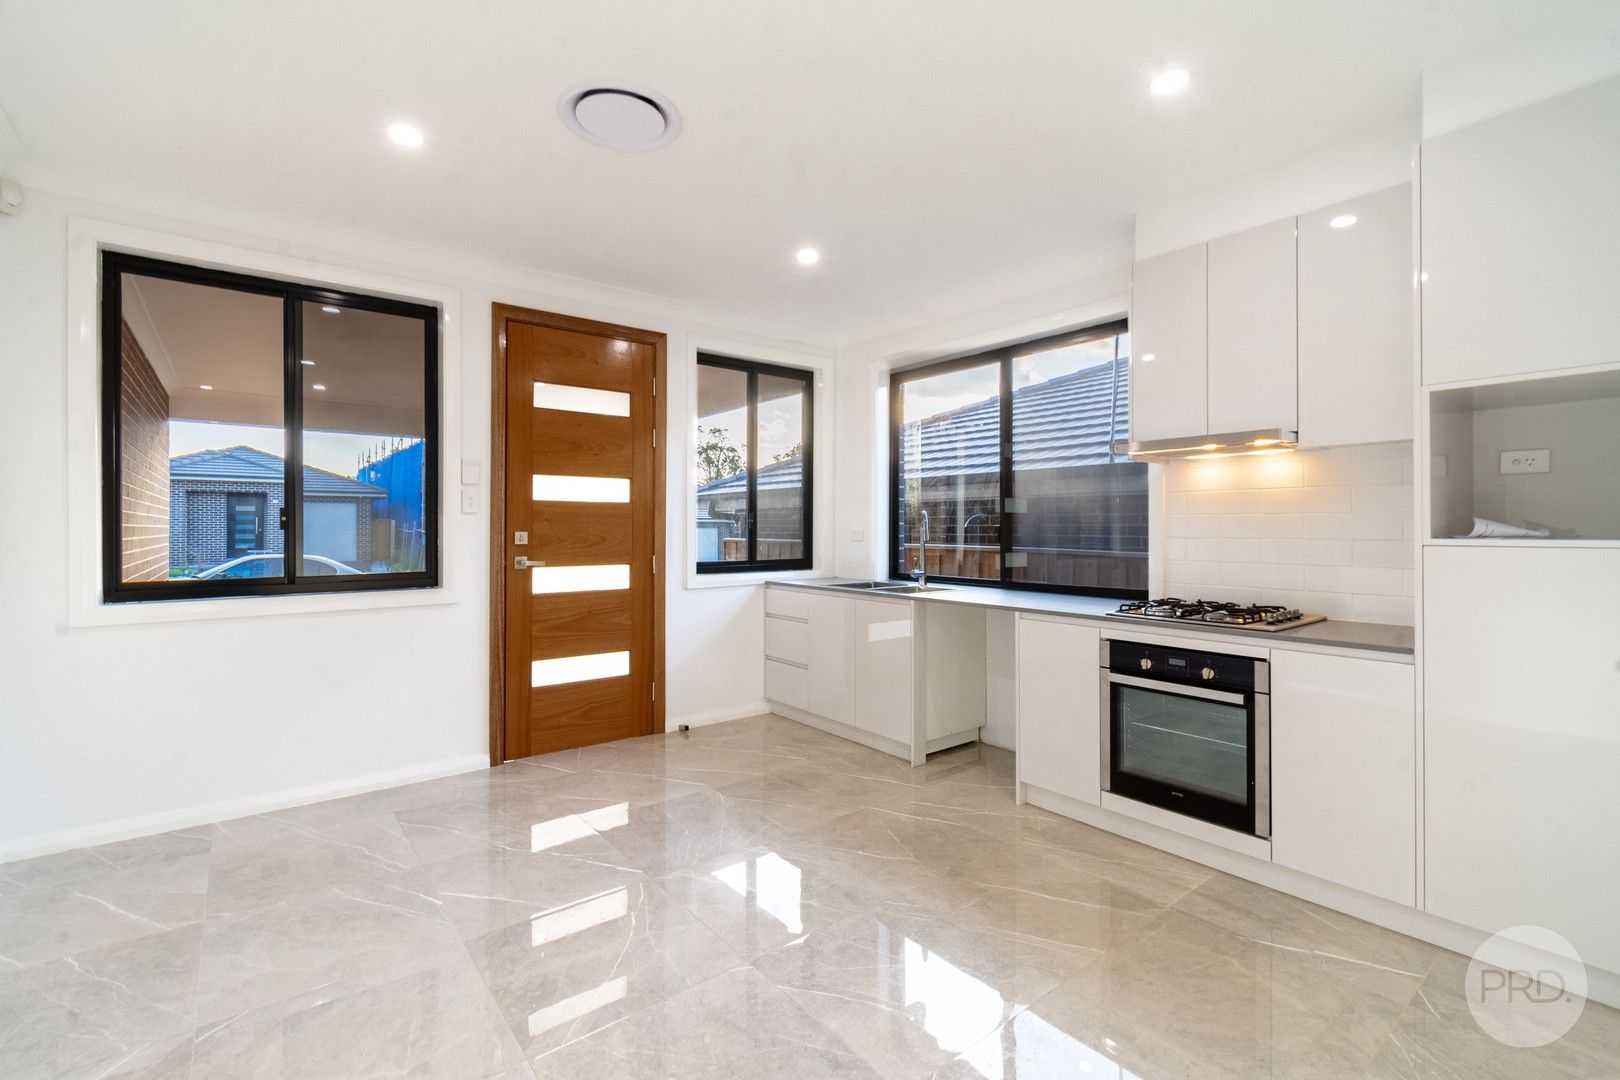 2 bedrooms House in 5A Sadlier St BRADBURY NSW, 2560